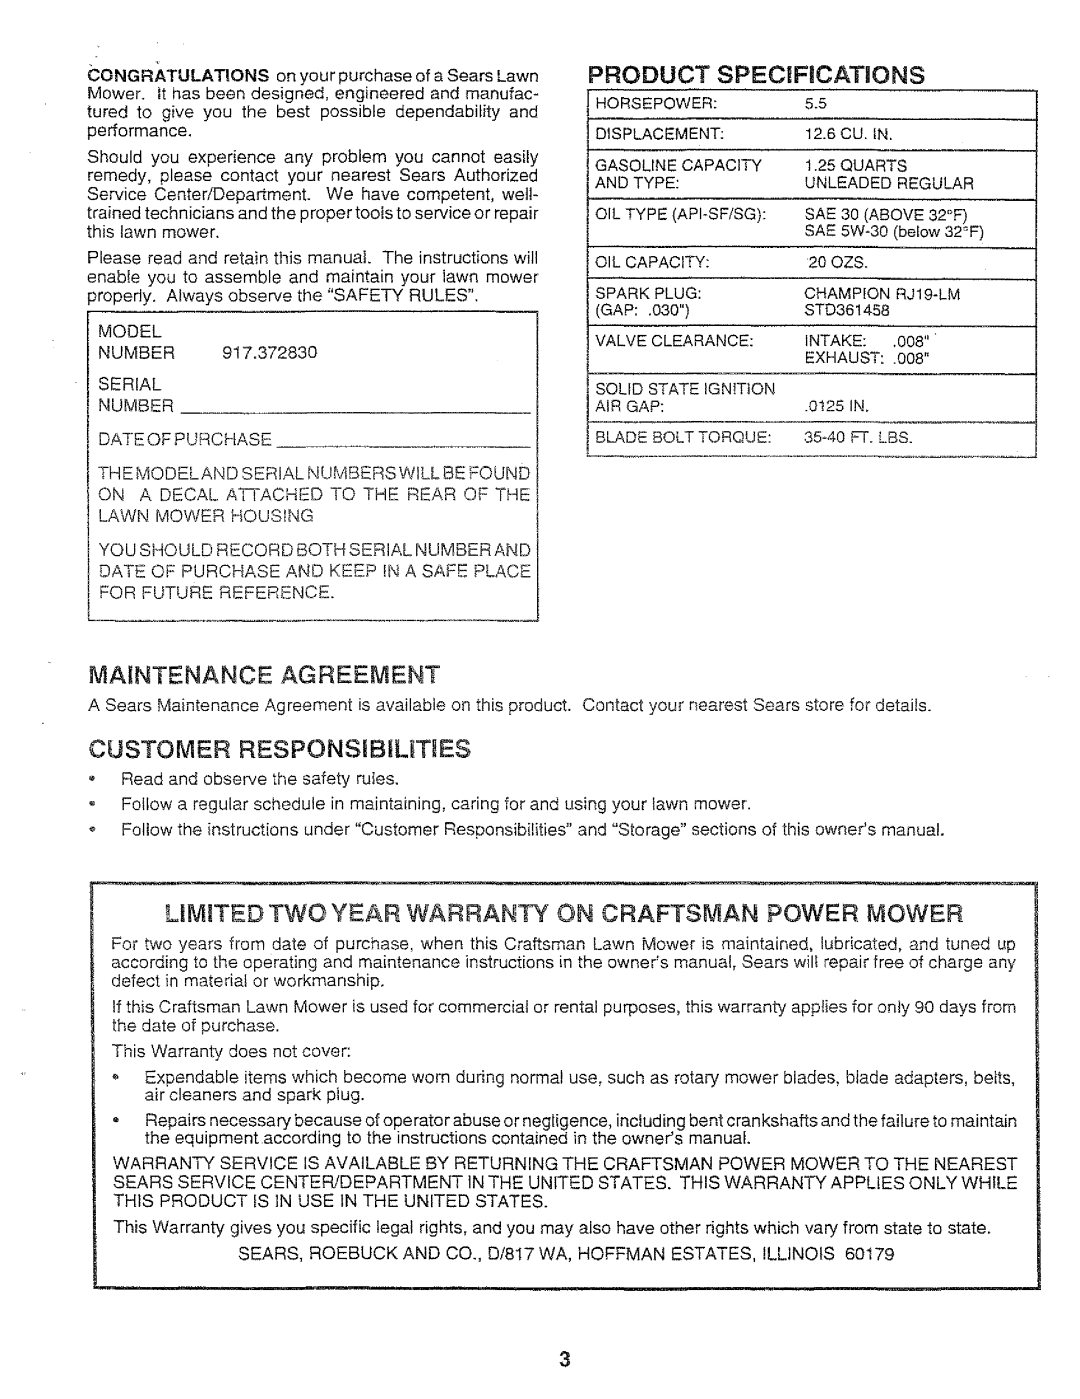 Sears 917.37283 manual Maintenance Agreement, Customer Responsibilities, PRODUCT SPEClFICAT ONS, Gap 